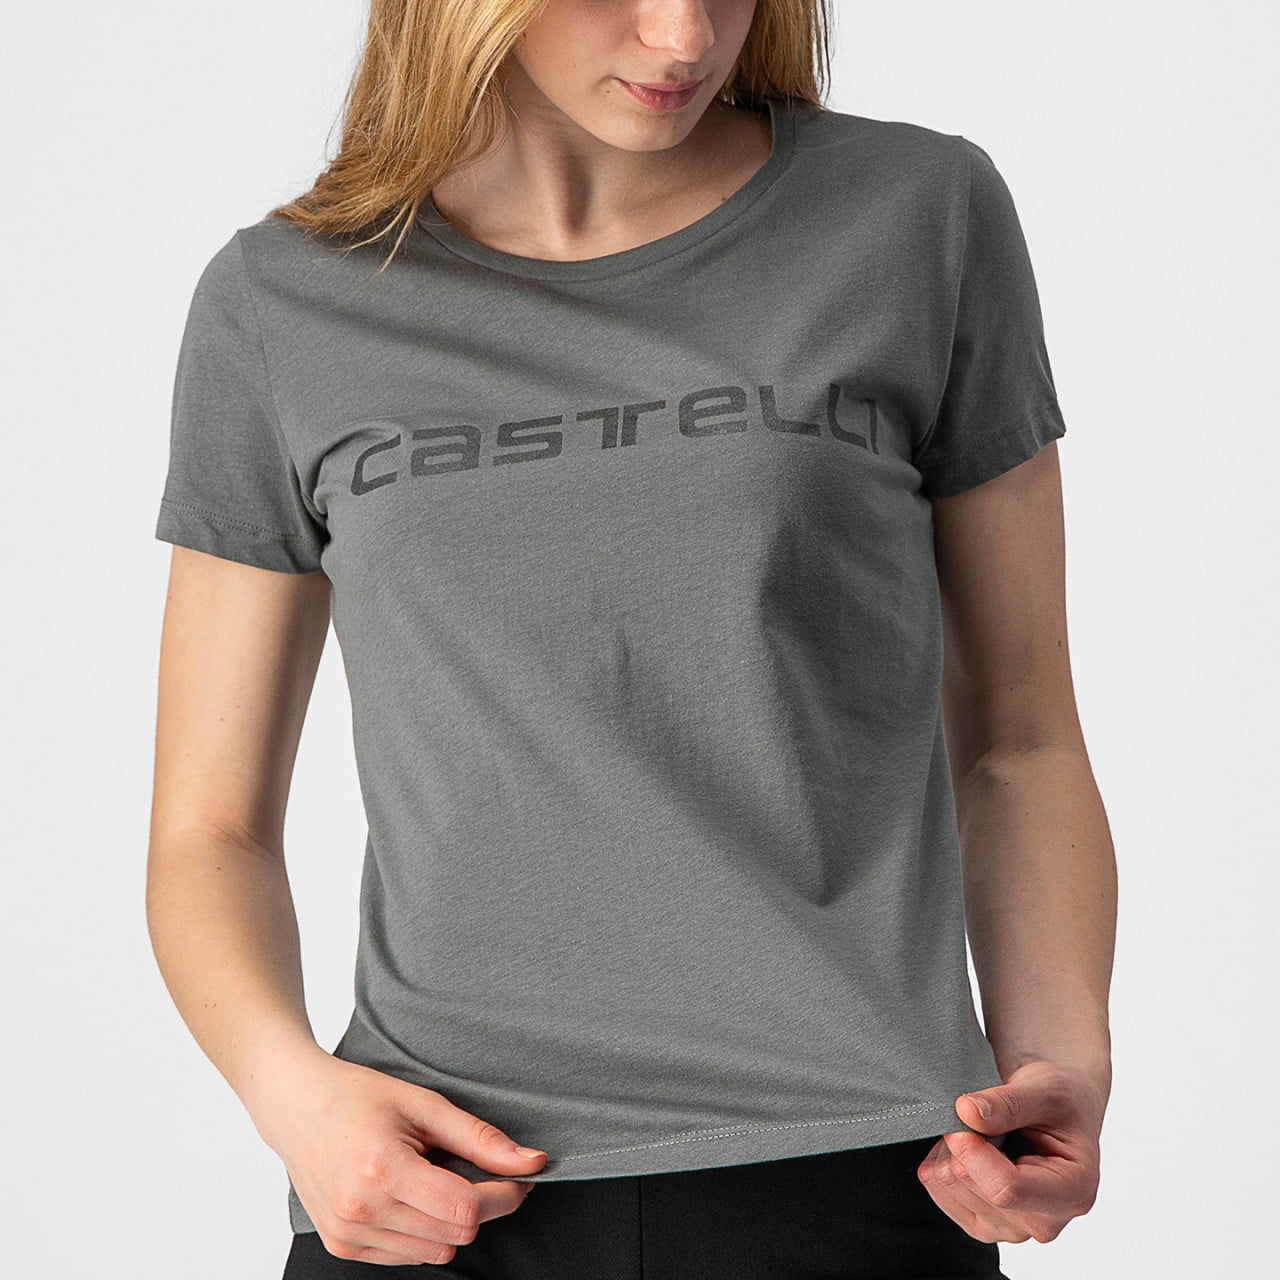 Realmente Pacer Tesauro CASTELLI Camiseta mujer Sprinter gris